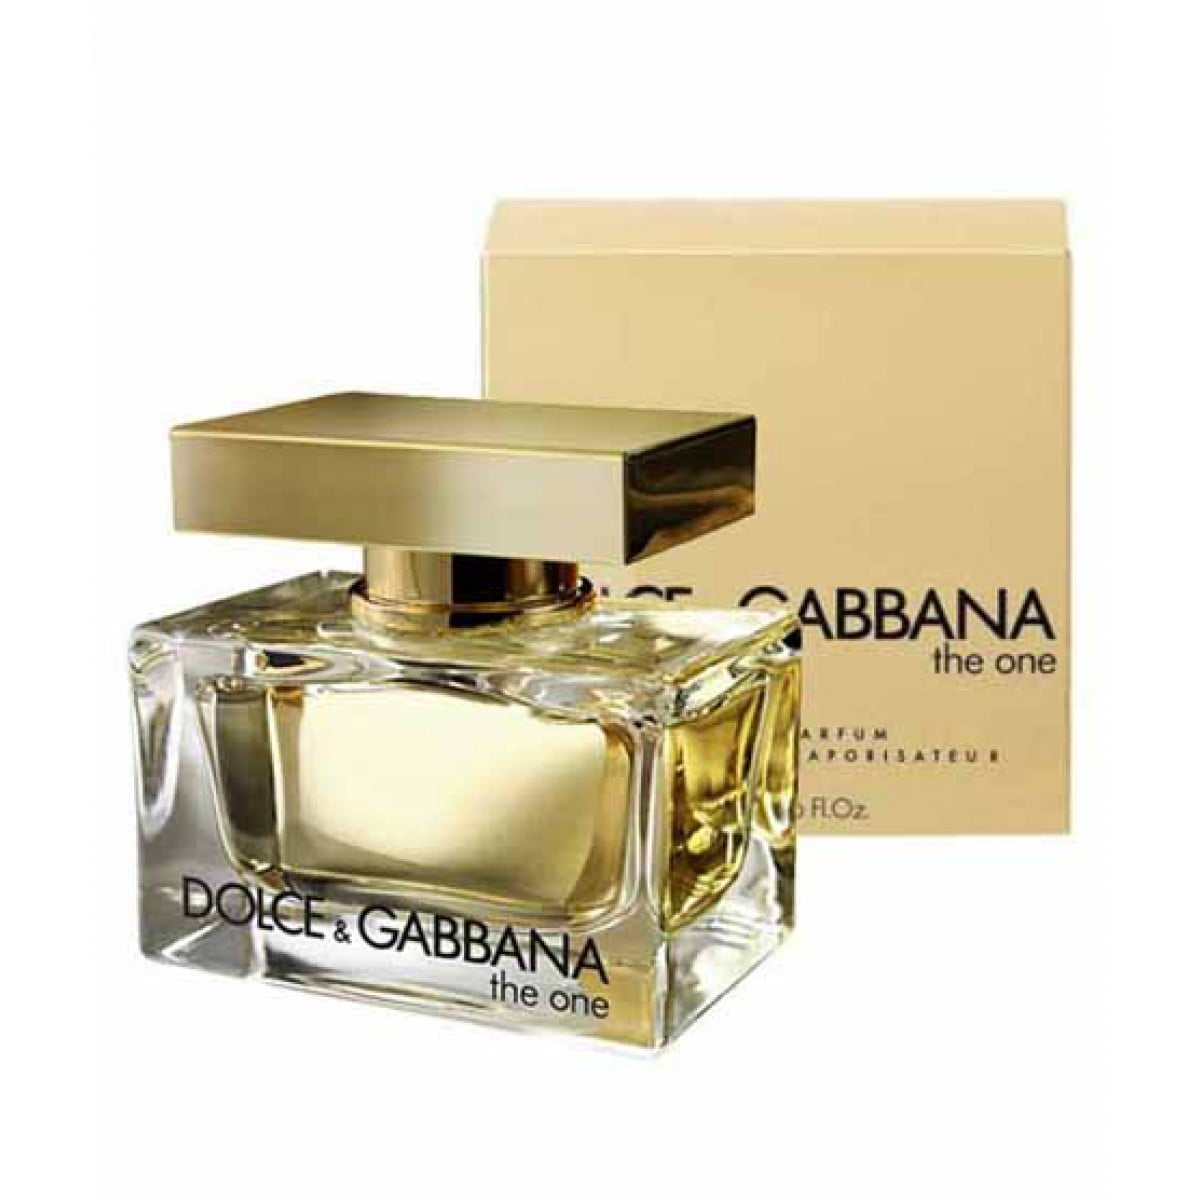 Dolce & Gabbana - D&G The One Woman | Nuochoarosa.com - Nước hoa cao